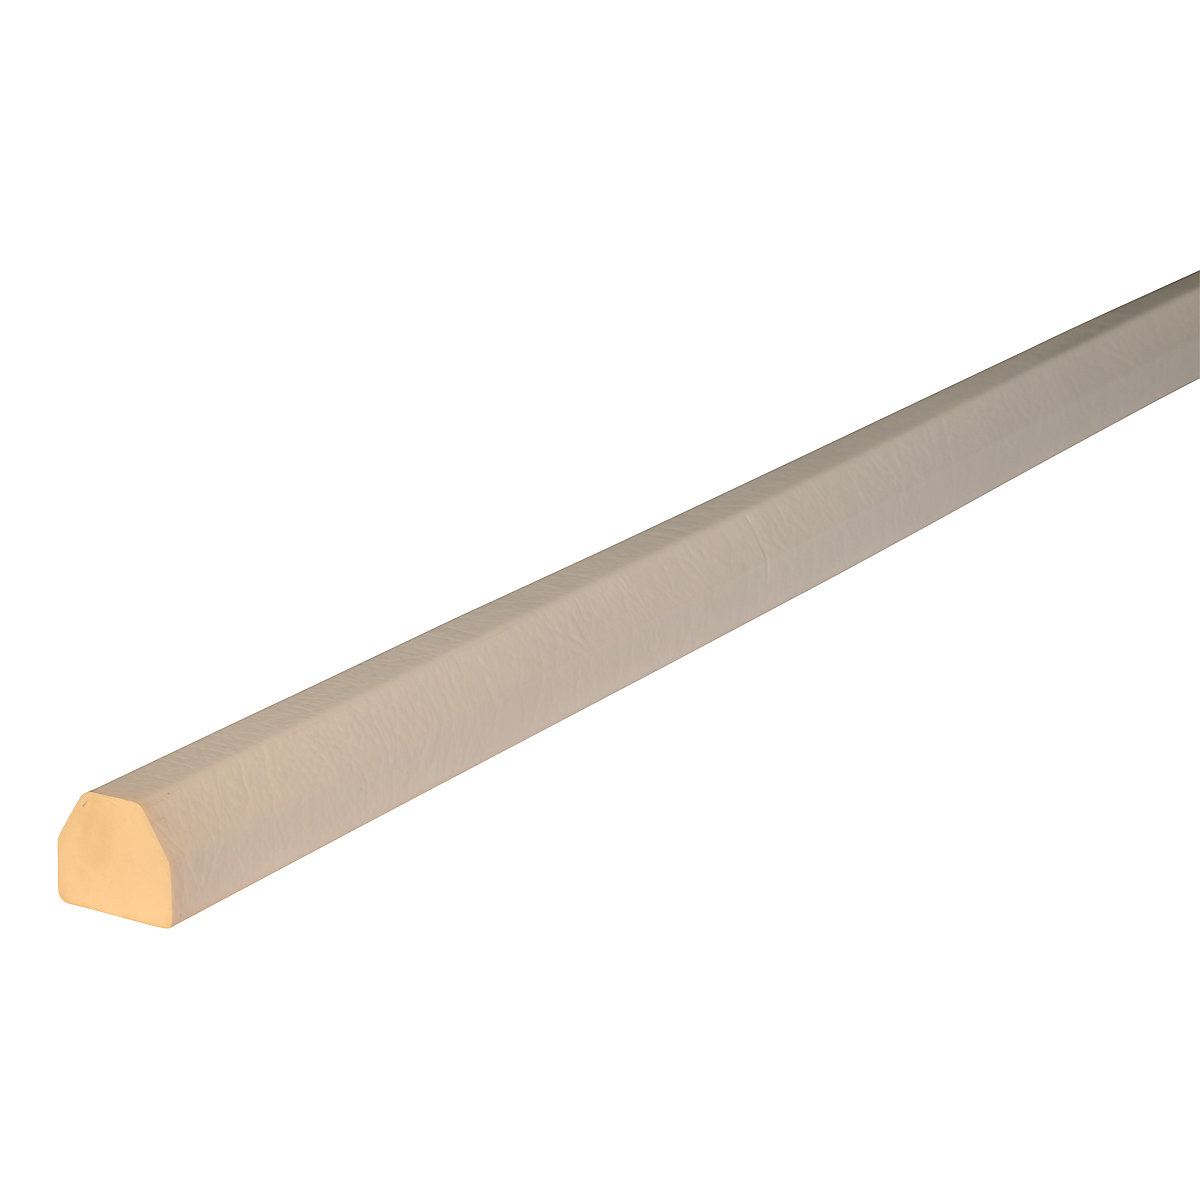 Knuffi®-oppervlaktebescherming – SHG, type CC, stuk van 1 m, wit-19